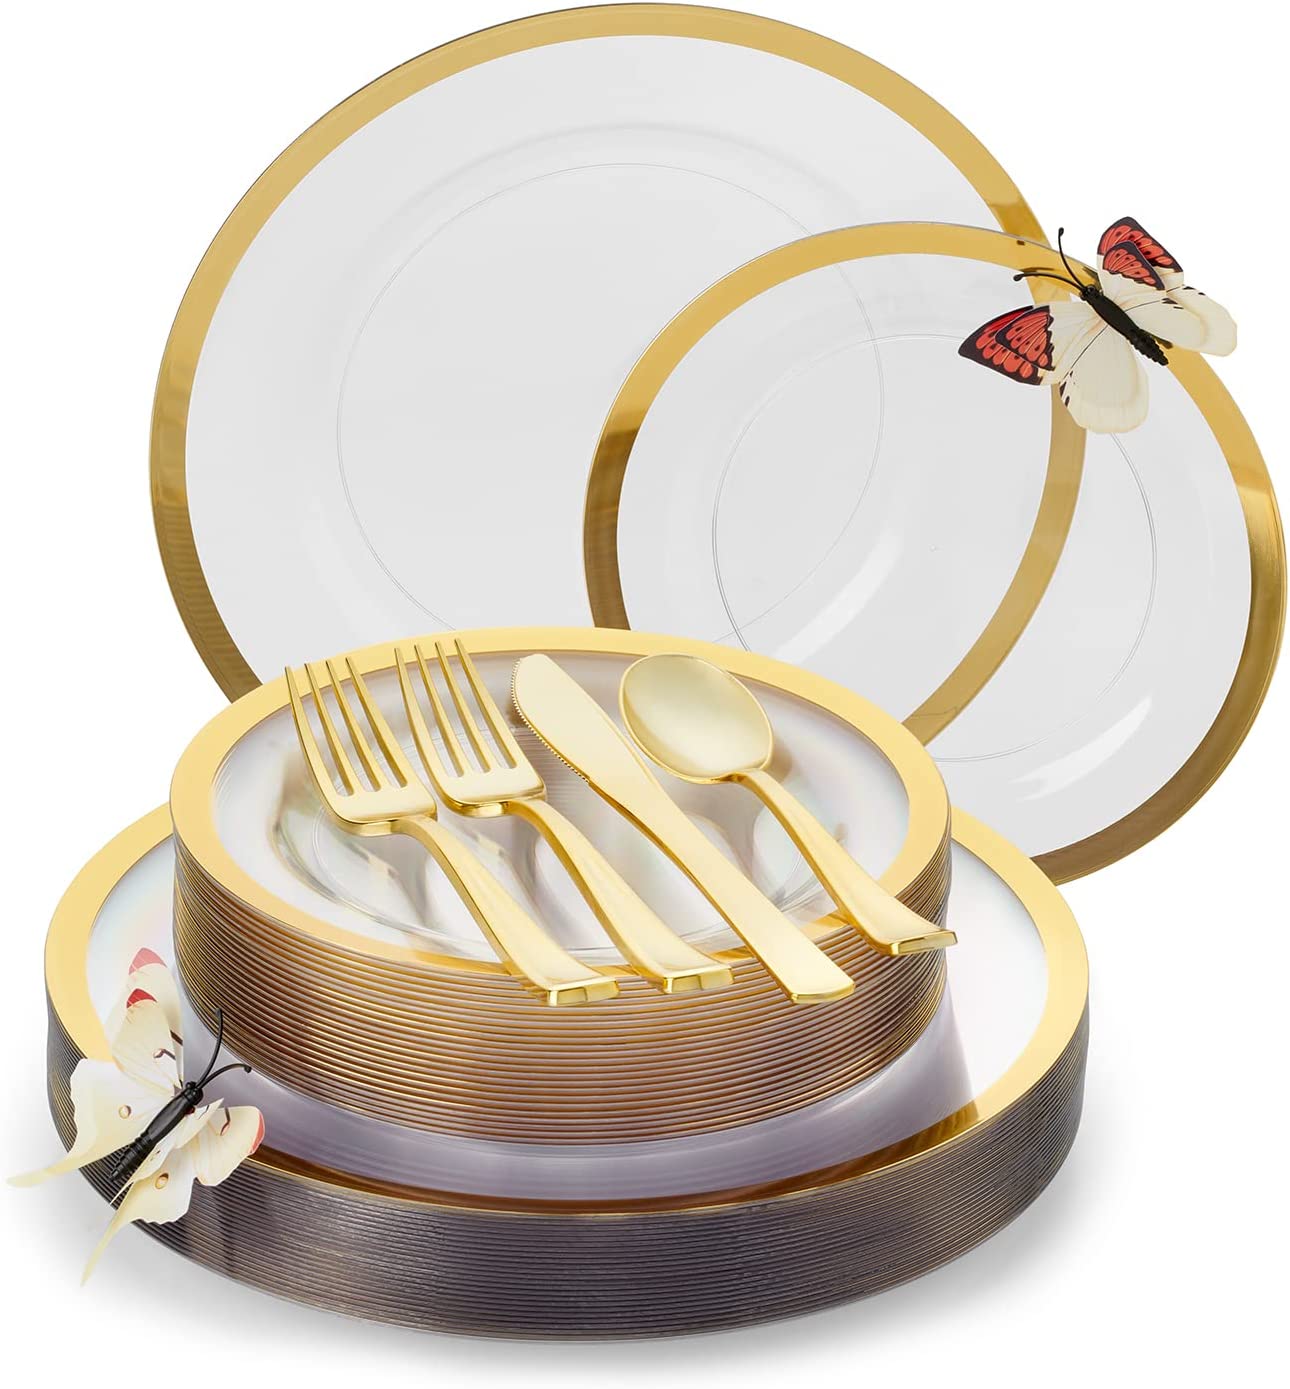 Clear Plastic Plates with Red Trim - Disposable Dinnerware Set - Bonus 3D Butterflies